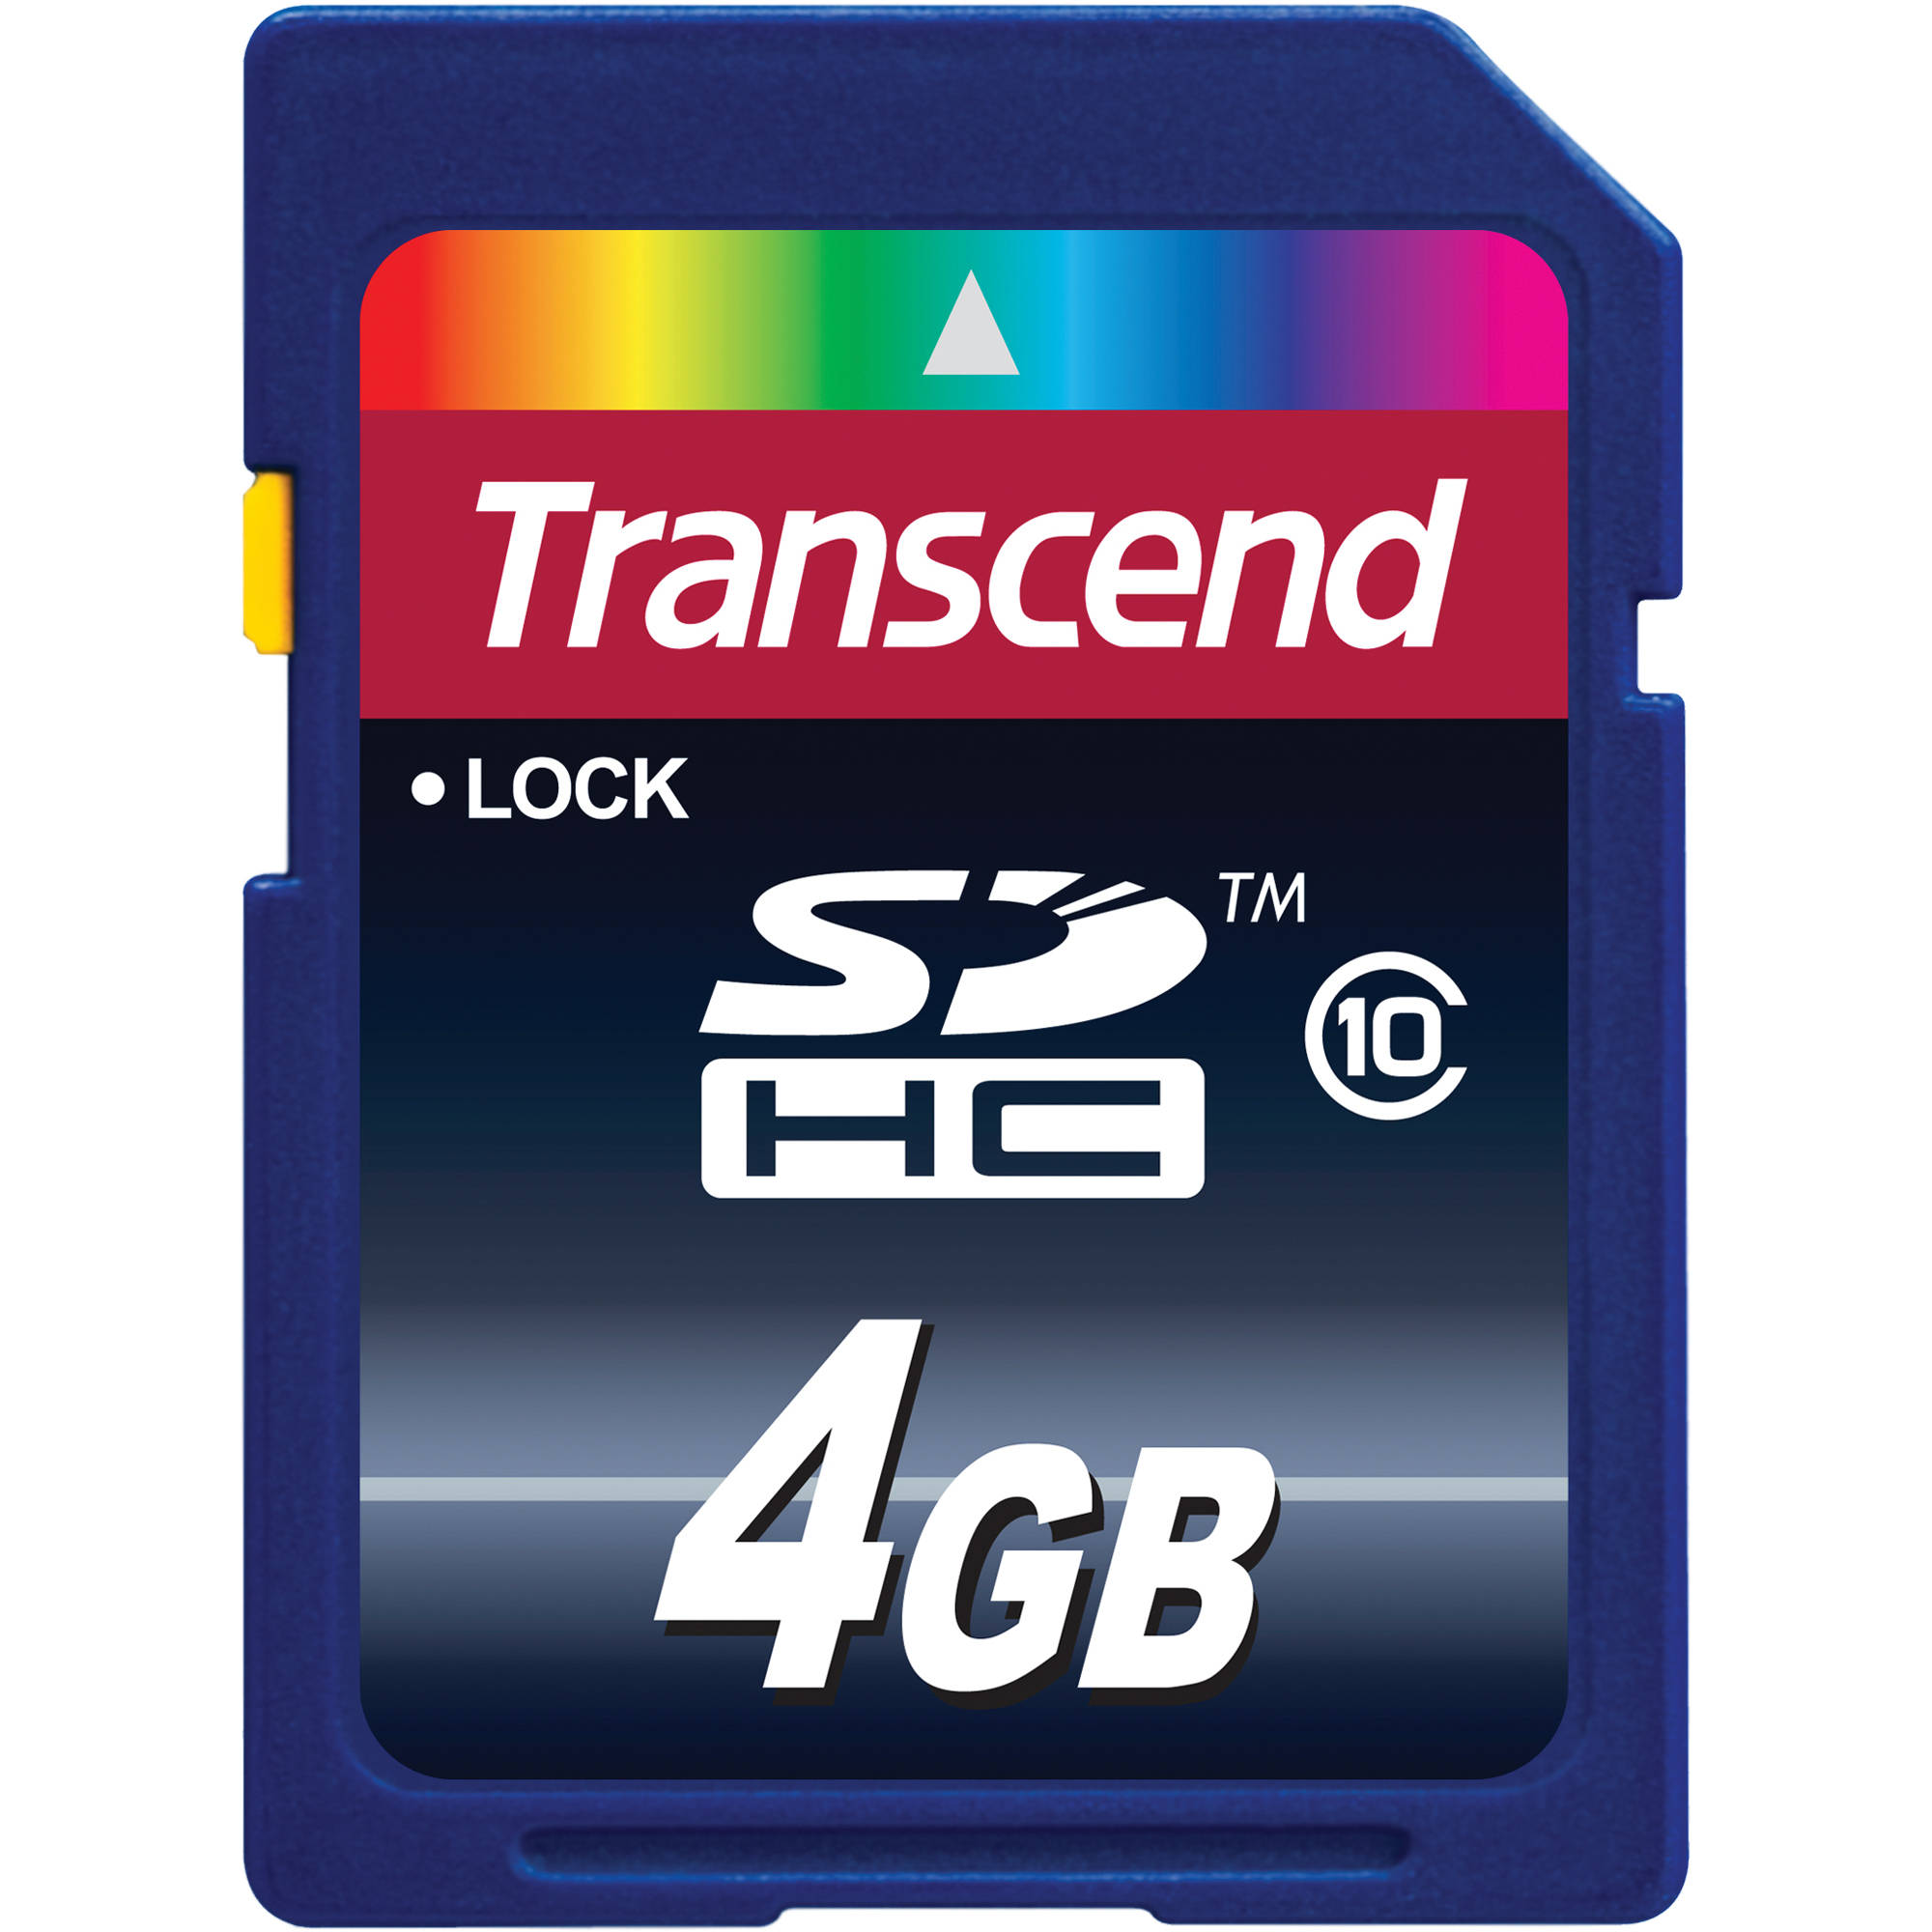 4GB SDHC 3.0 CLASS 10 TRANSCEND 